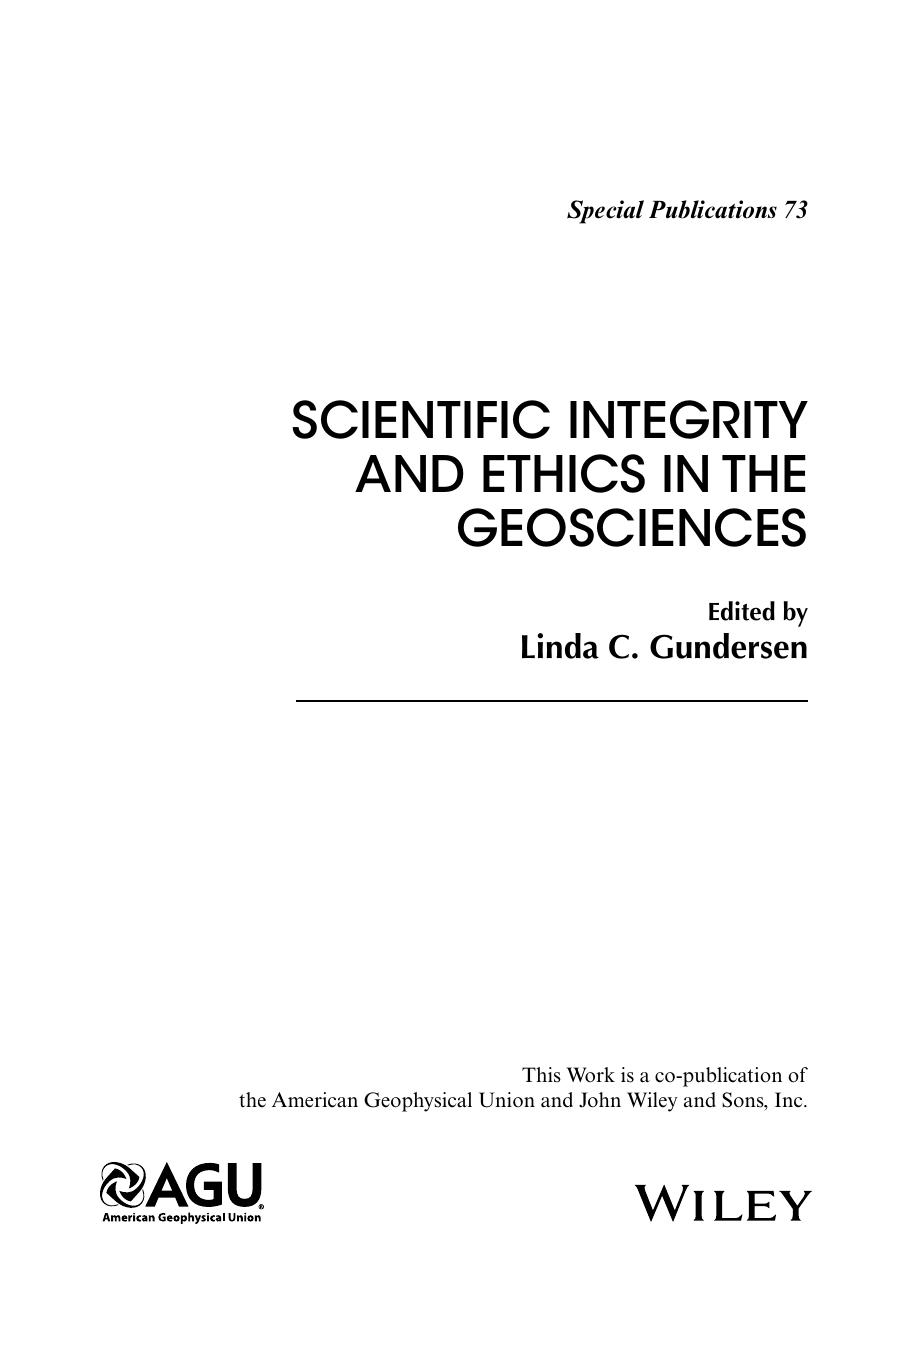 Scientific Integrity and Ethics in the Geosciences by Linda C. Gundersen